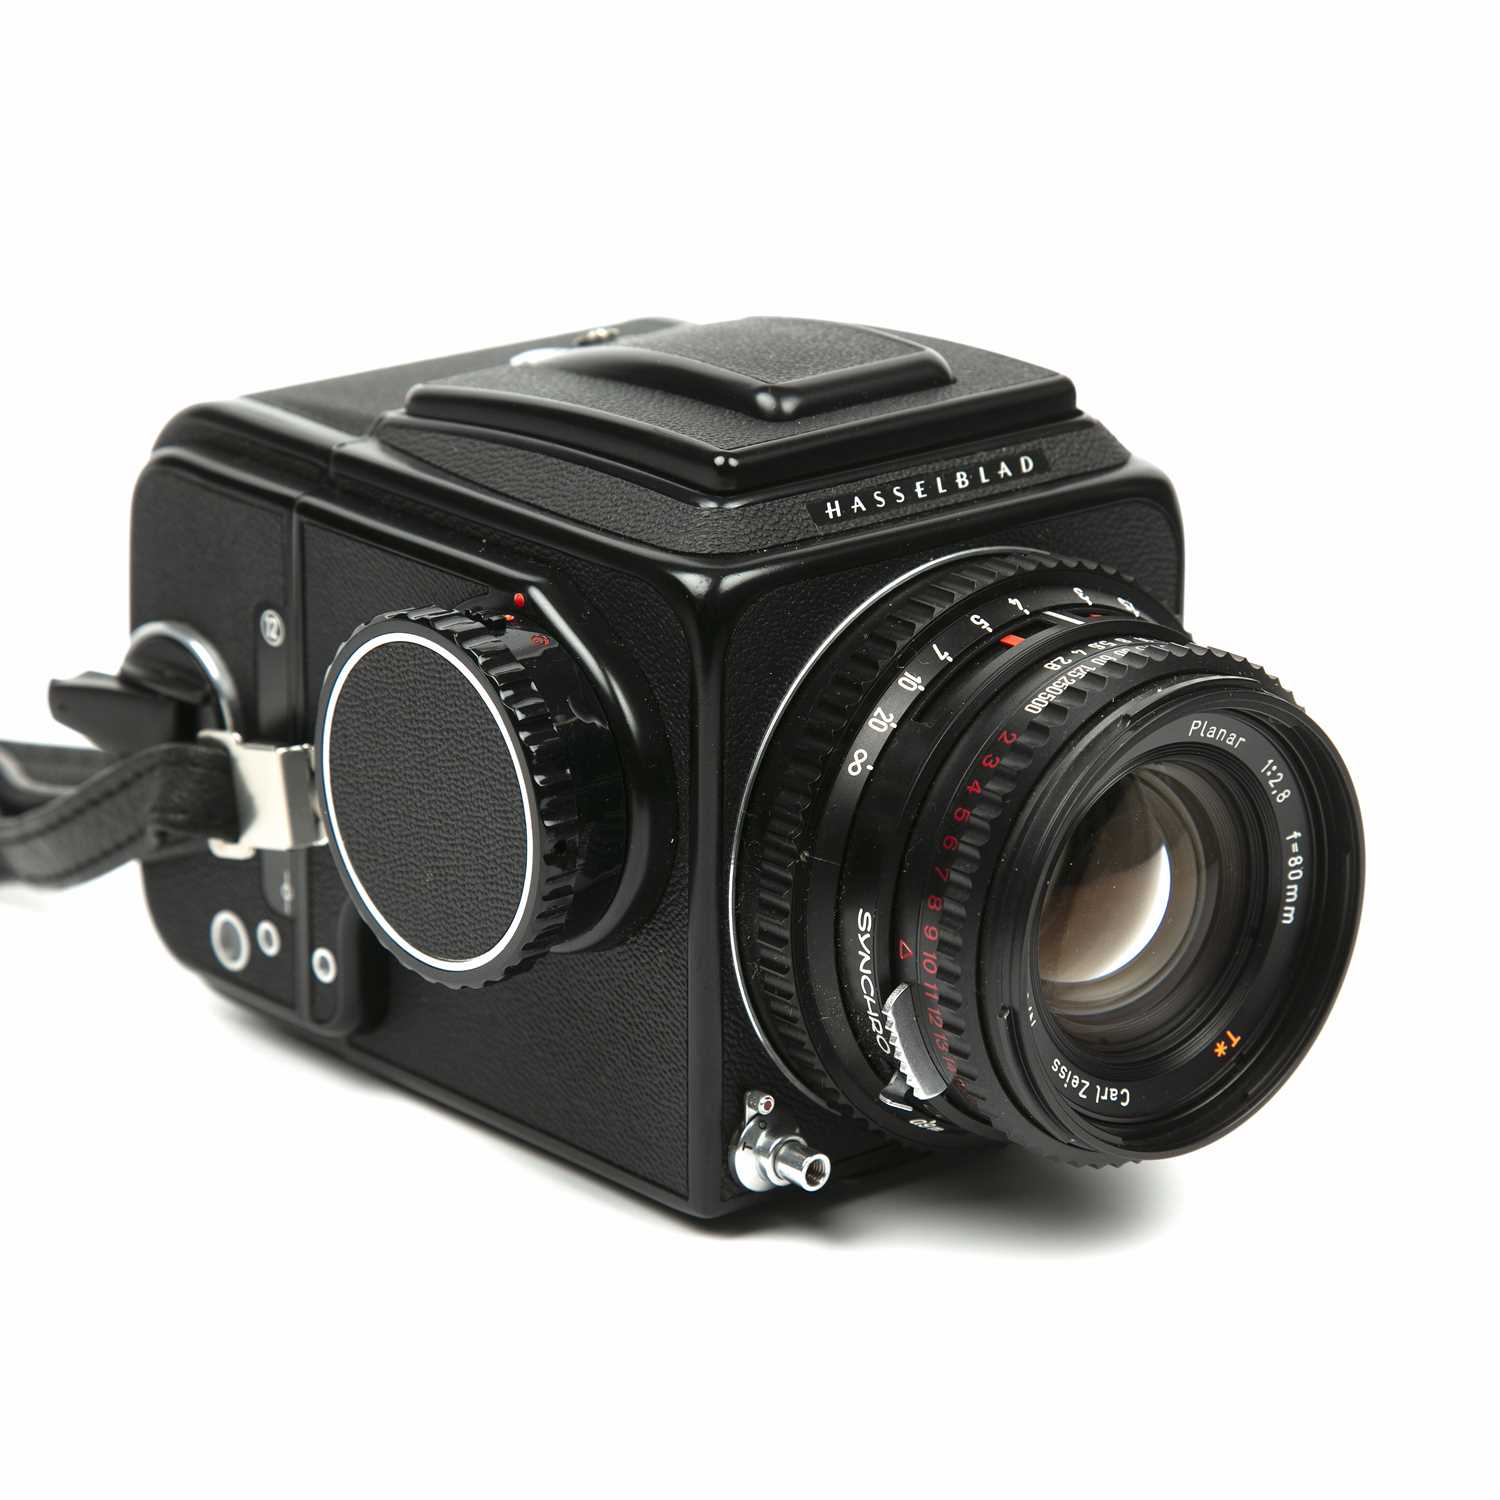 A Hasselblad 500C/M medium format camera with a Carl Zeiss Planar f/2.8 f=80mm Nr 6273829